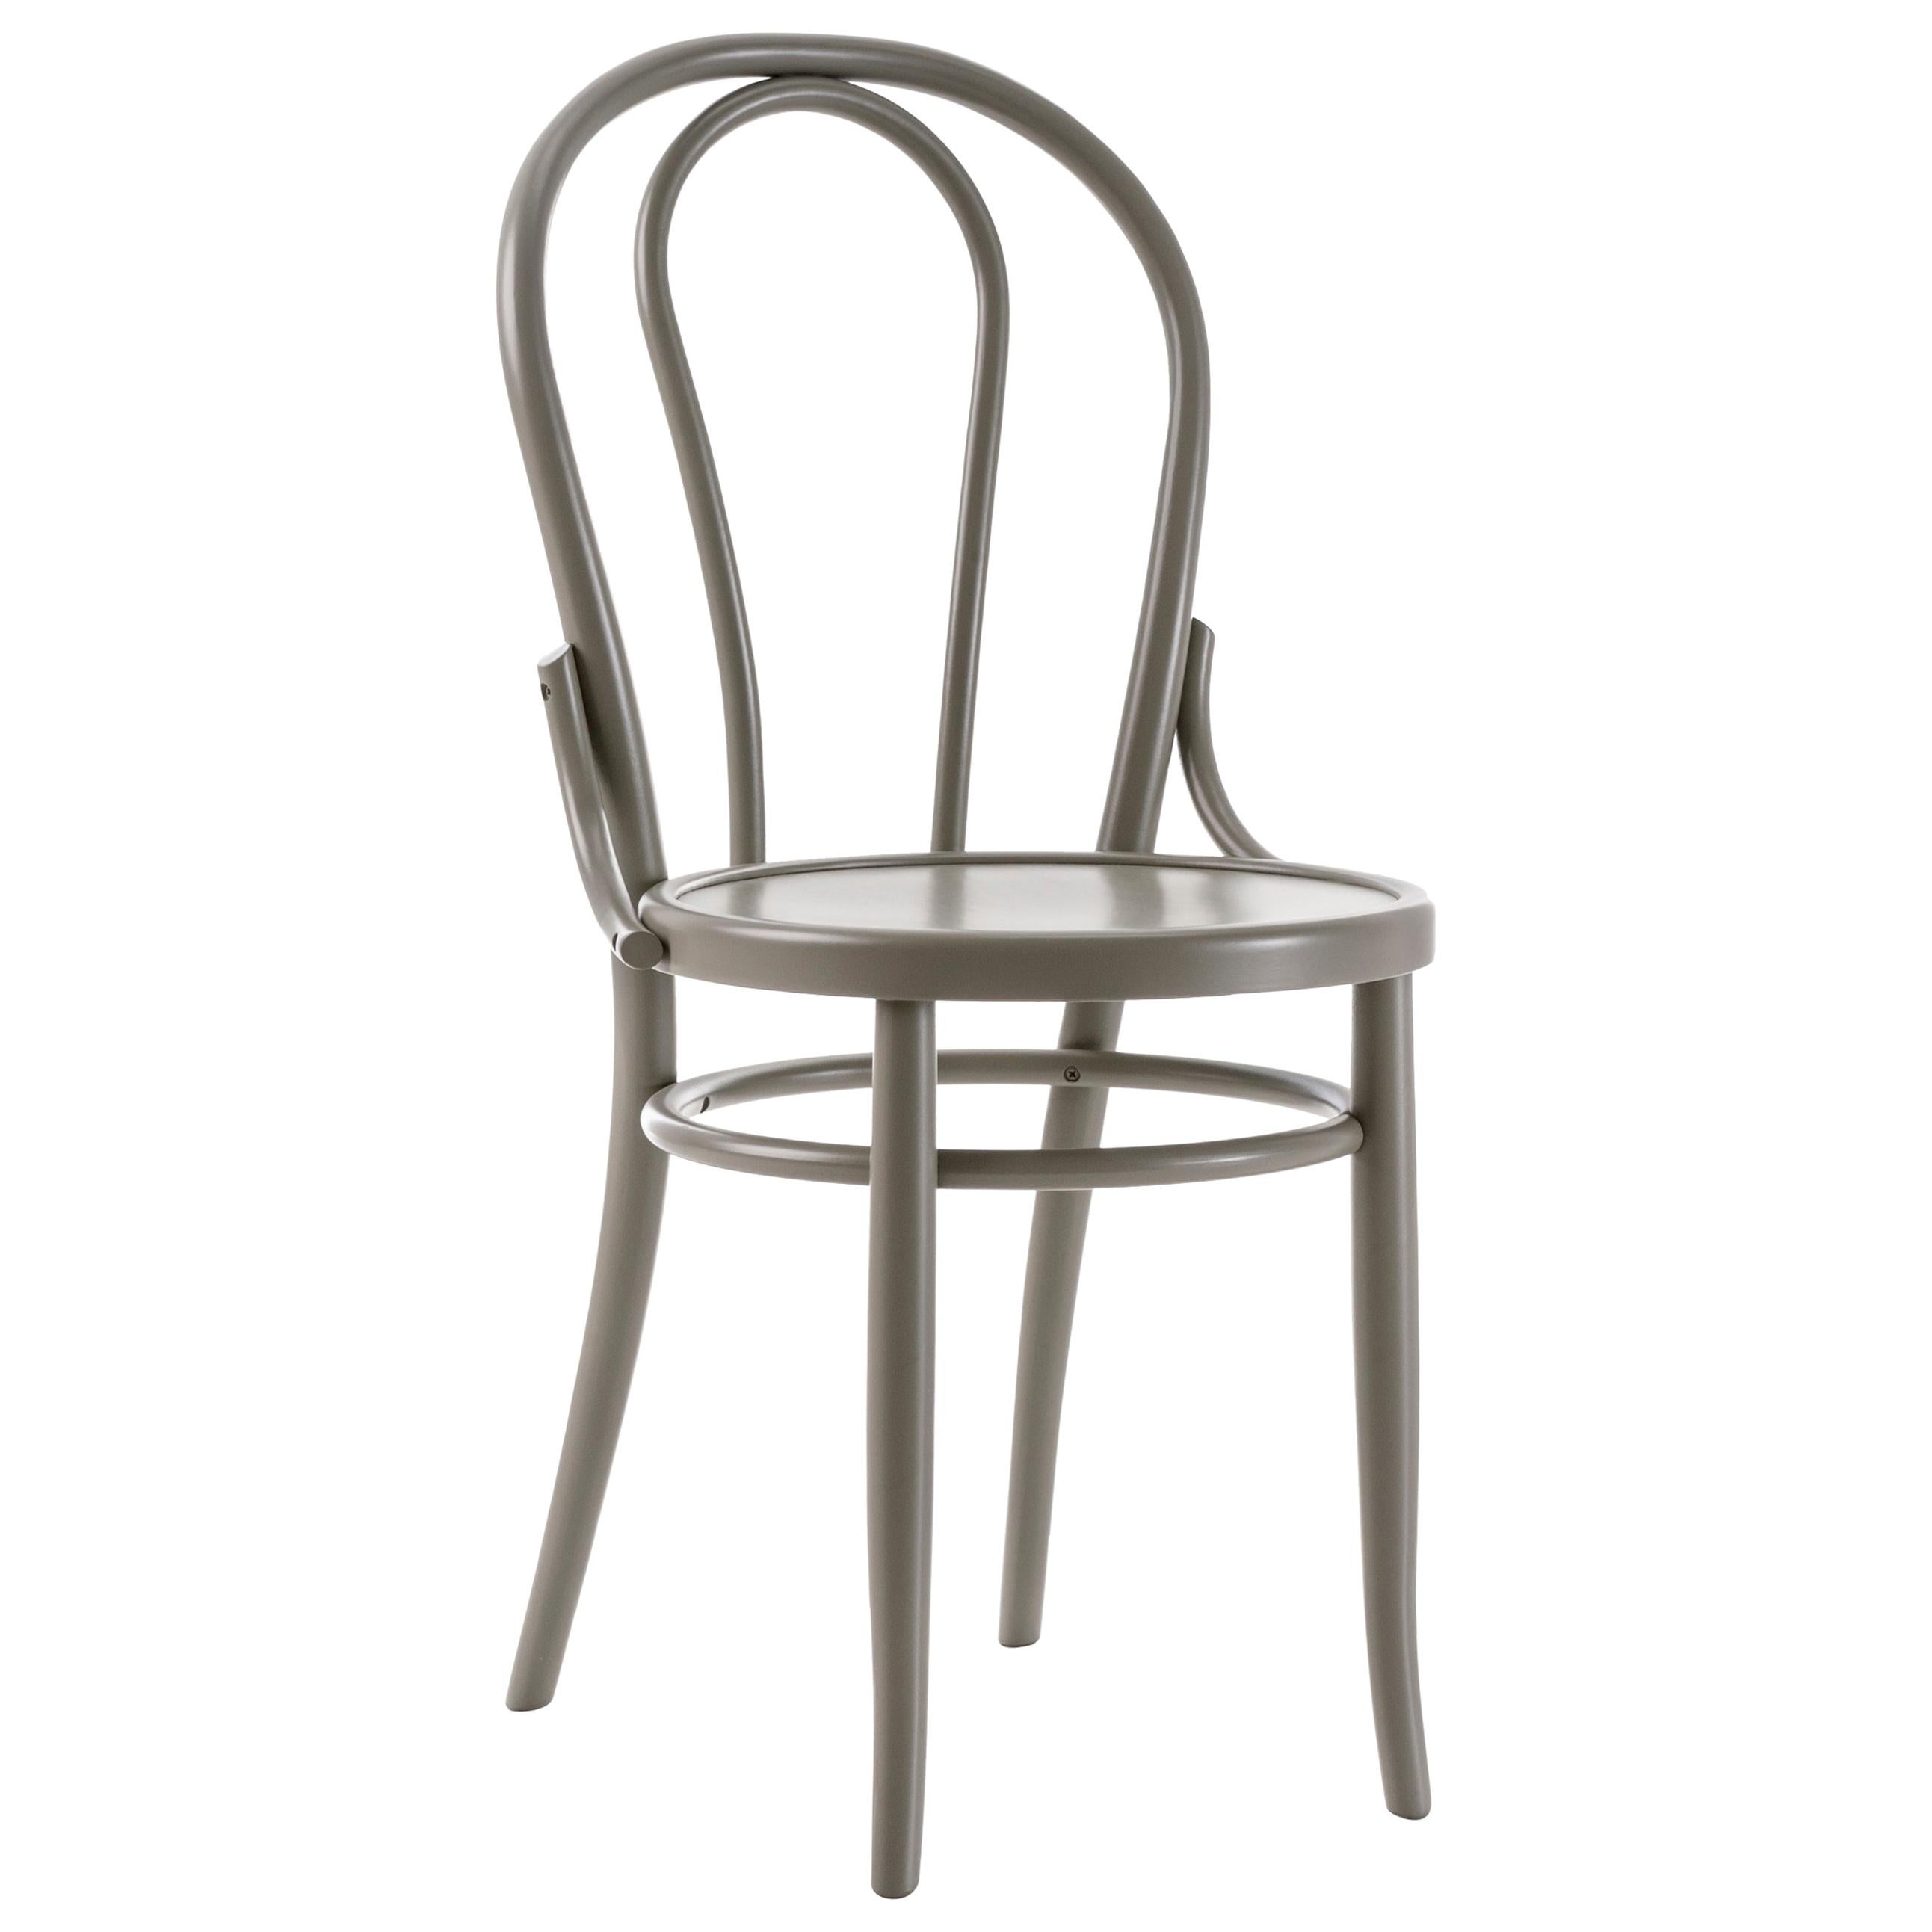 Gebrüder Thonet Vienna GmbH N.18 Chair in Stone Grey with Plywood Seat